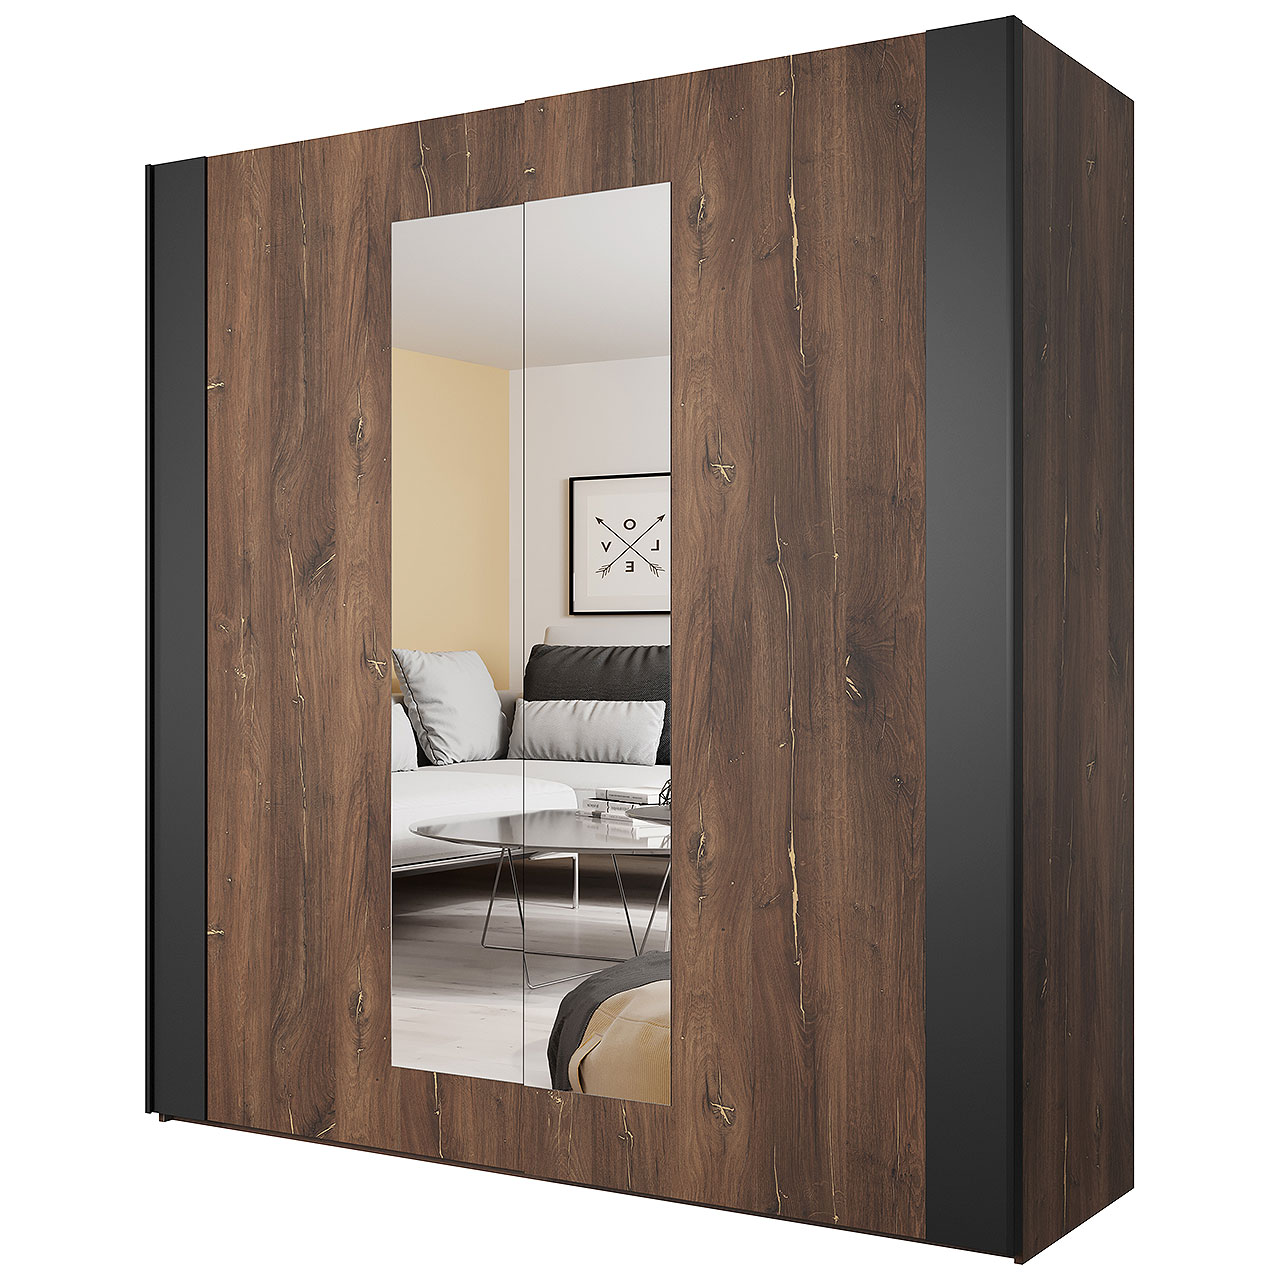 Sliding wardrobe with mirror SIGMA SG18 flagstaff oak copper / black